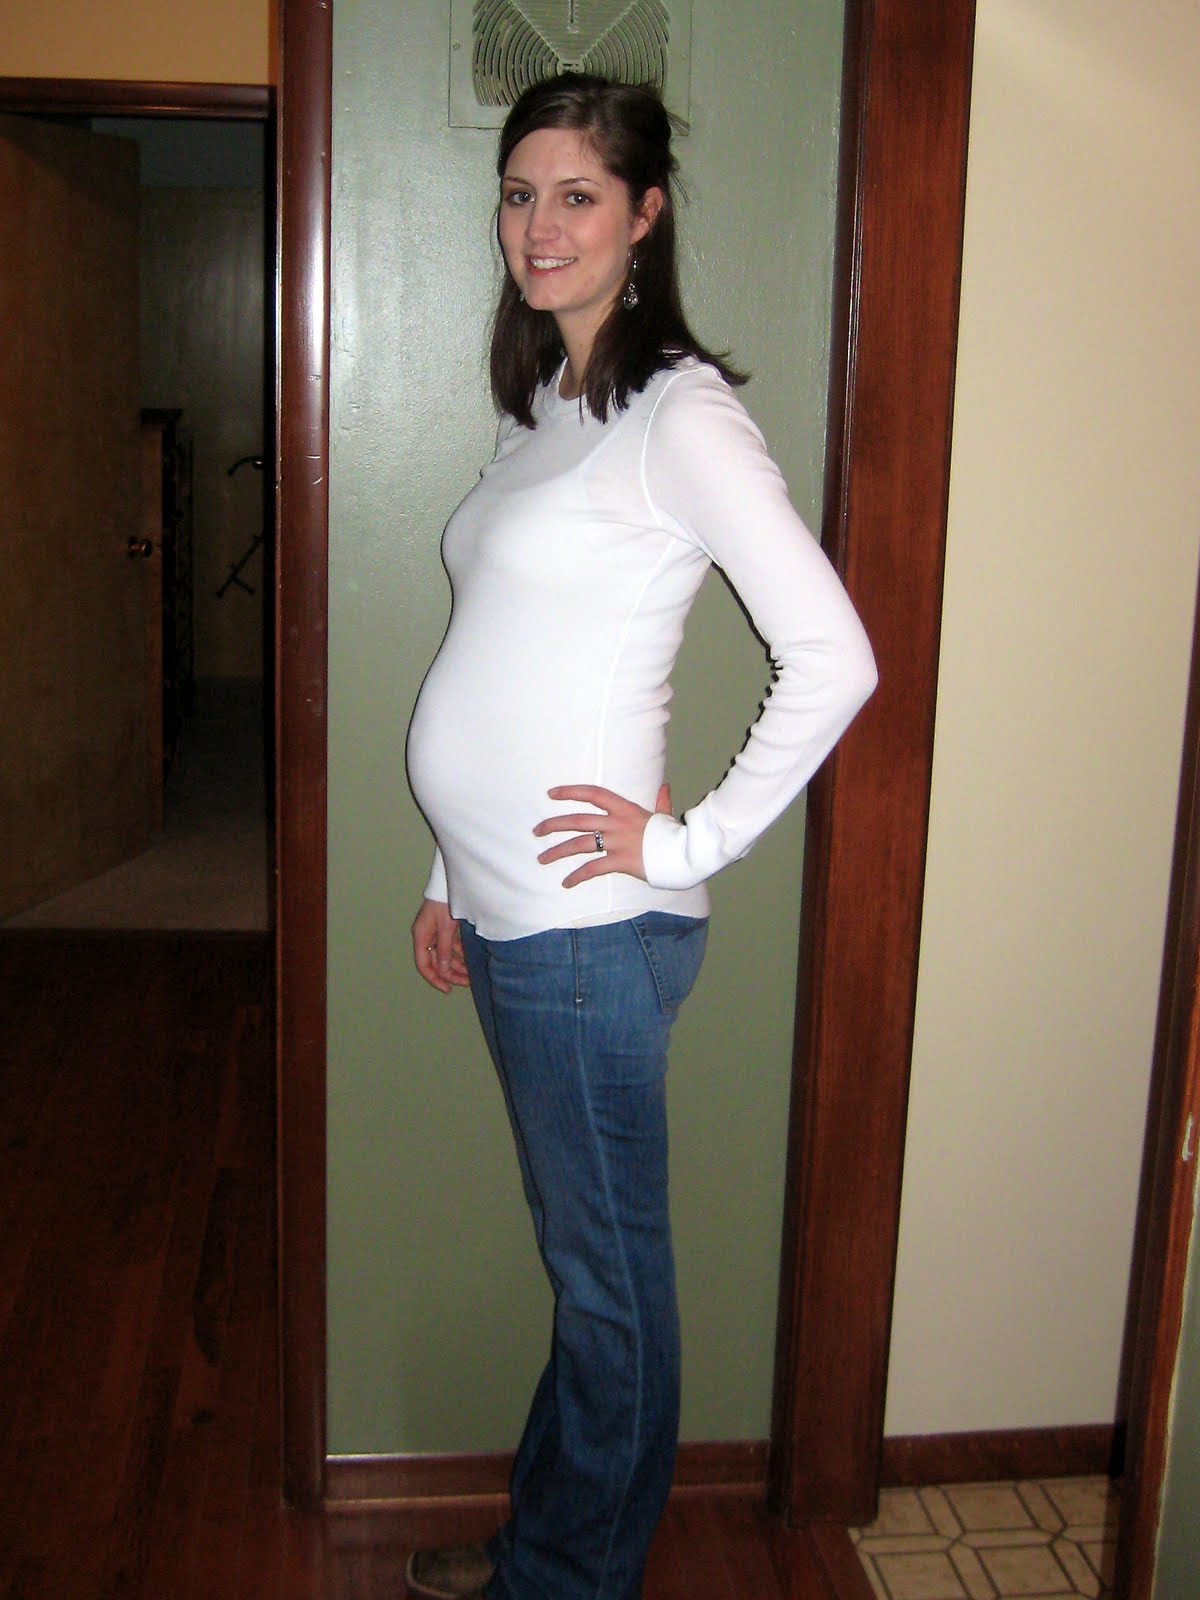 Фото живот на 5 месяце беременности фото